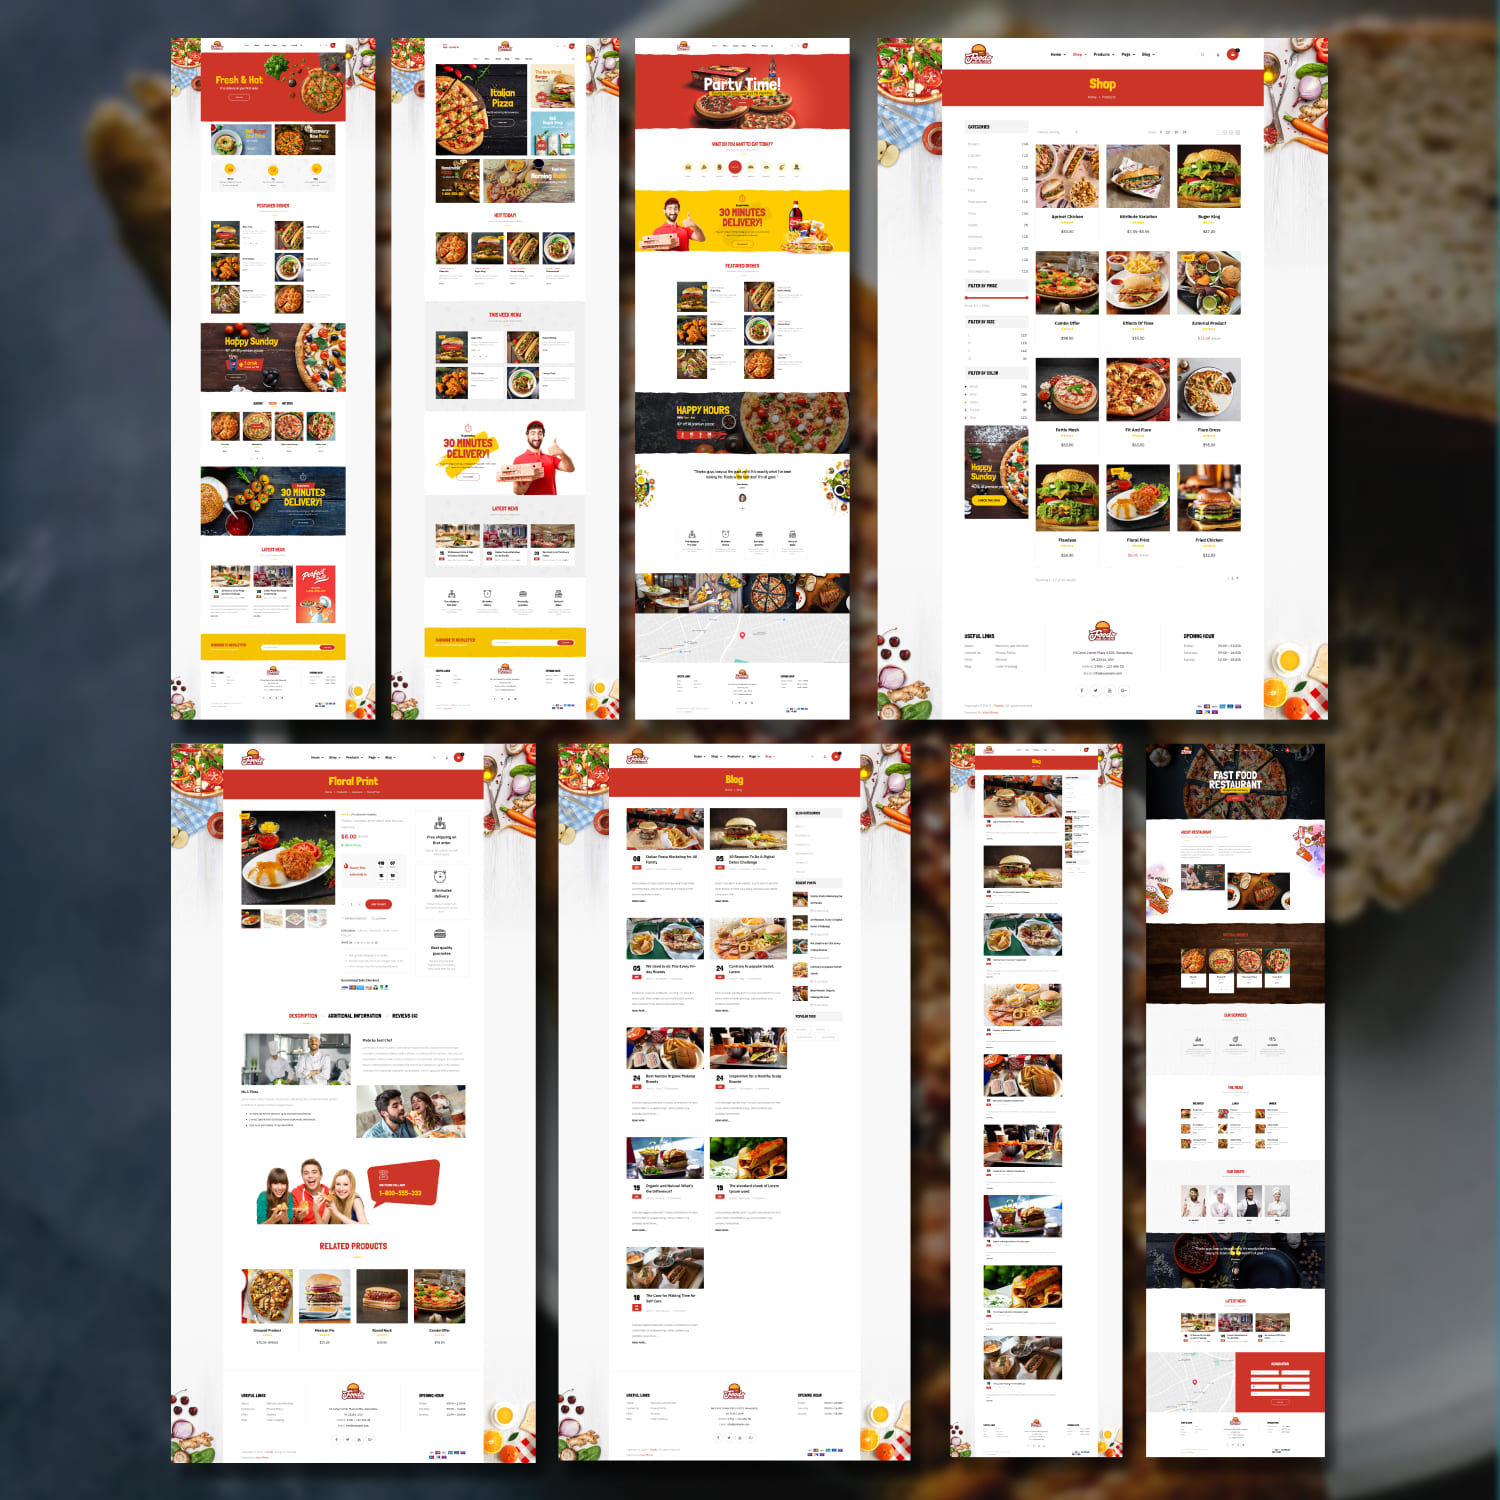 Foodo - Fast Food Restaurant WordPress Theme cover.